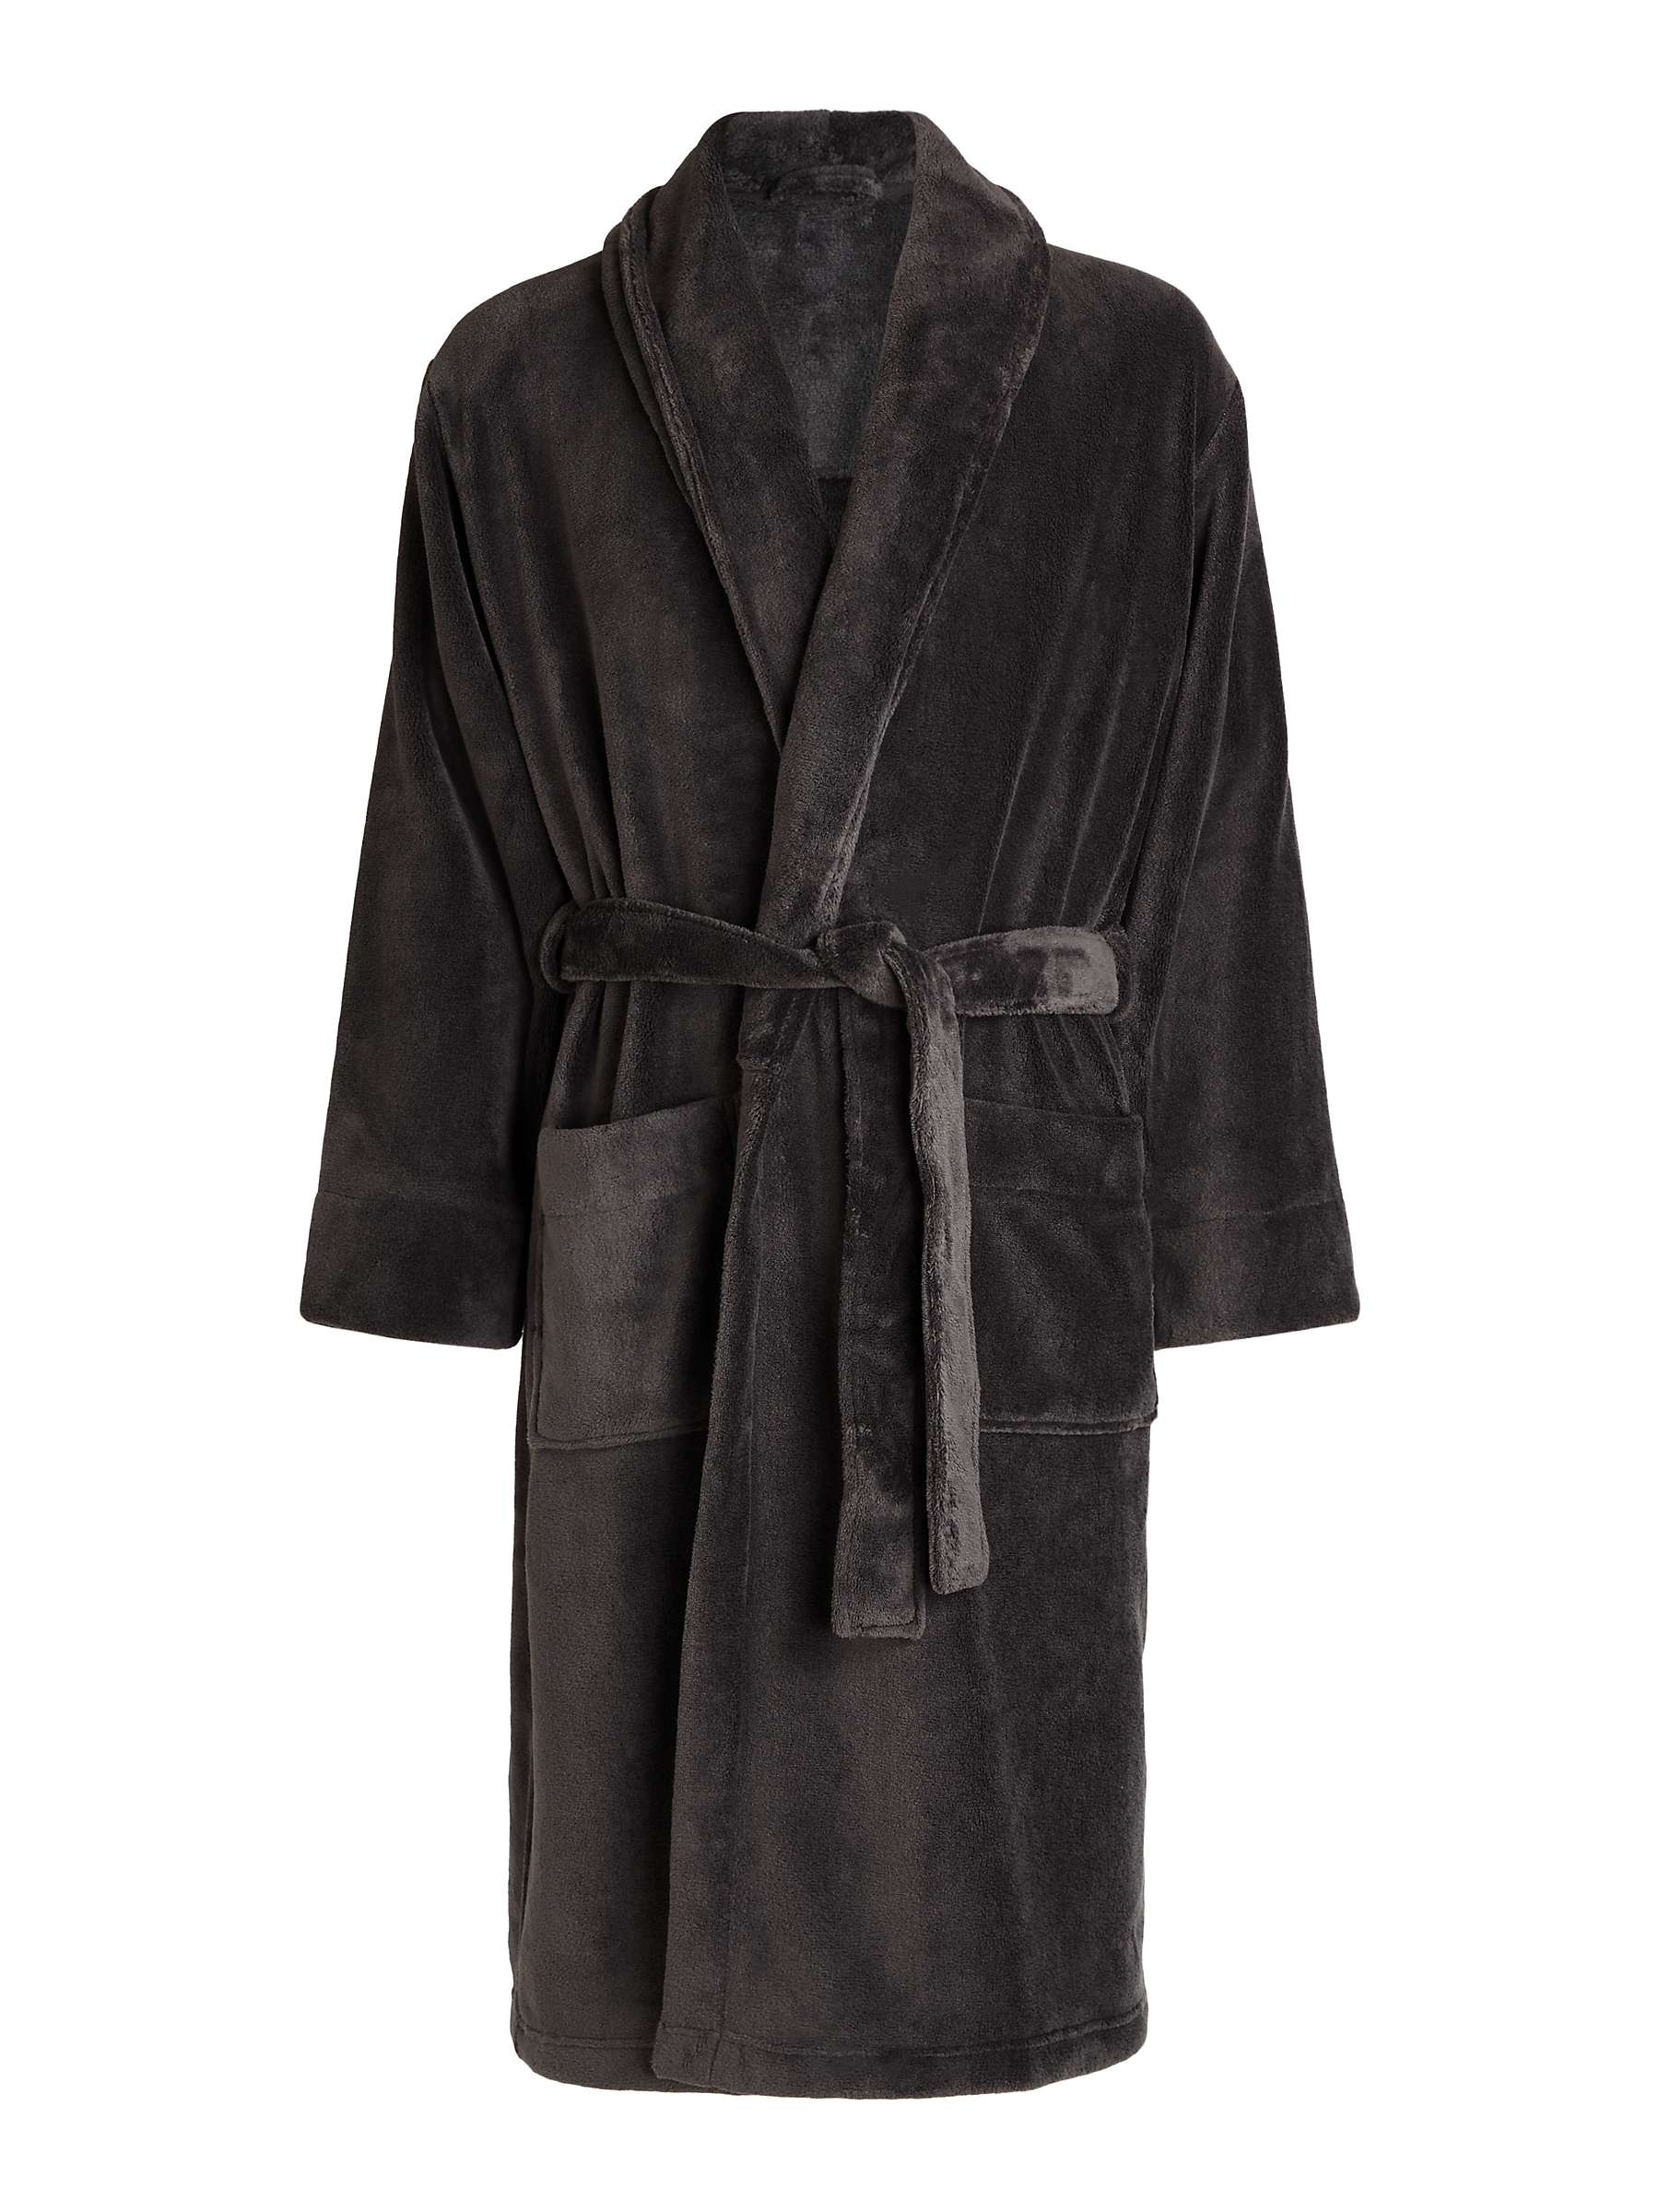 Buy John Lewis Sheared Fleece Robe Online at johnlewis.com